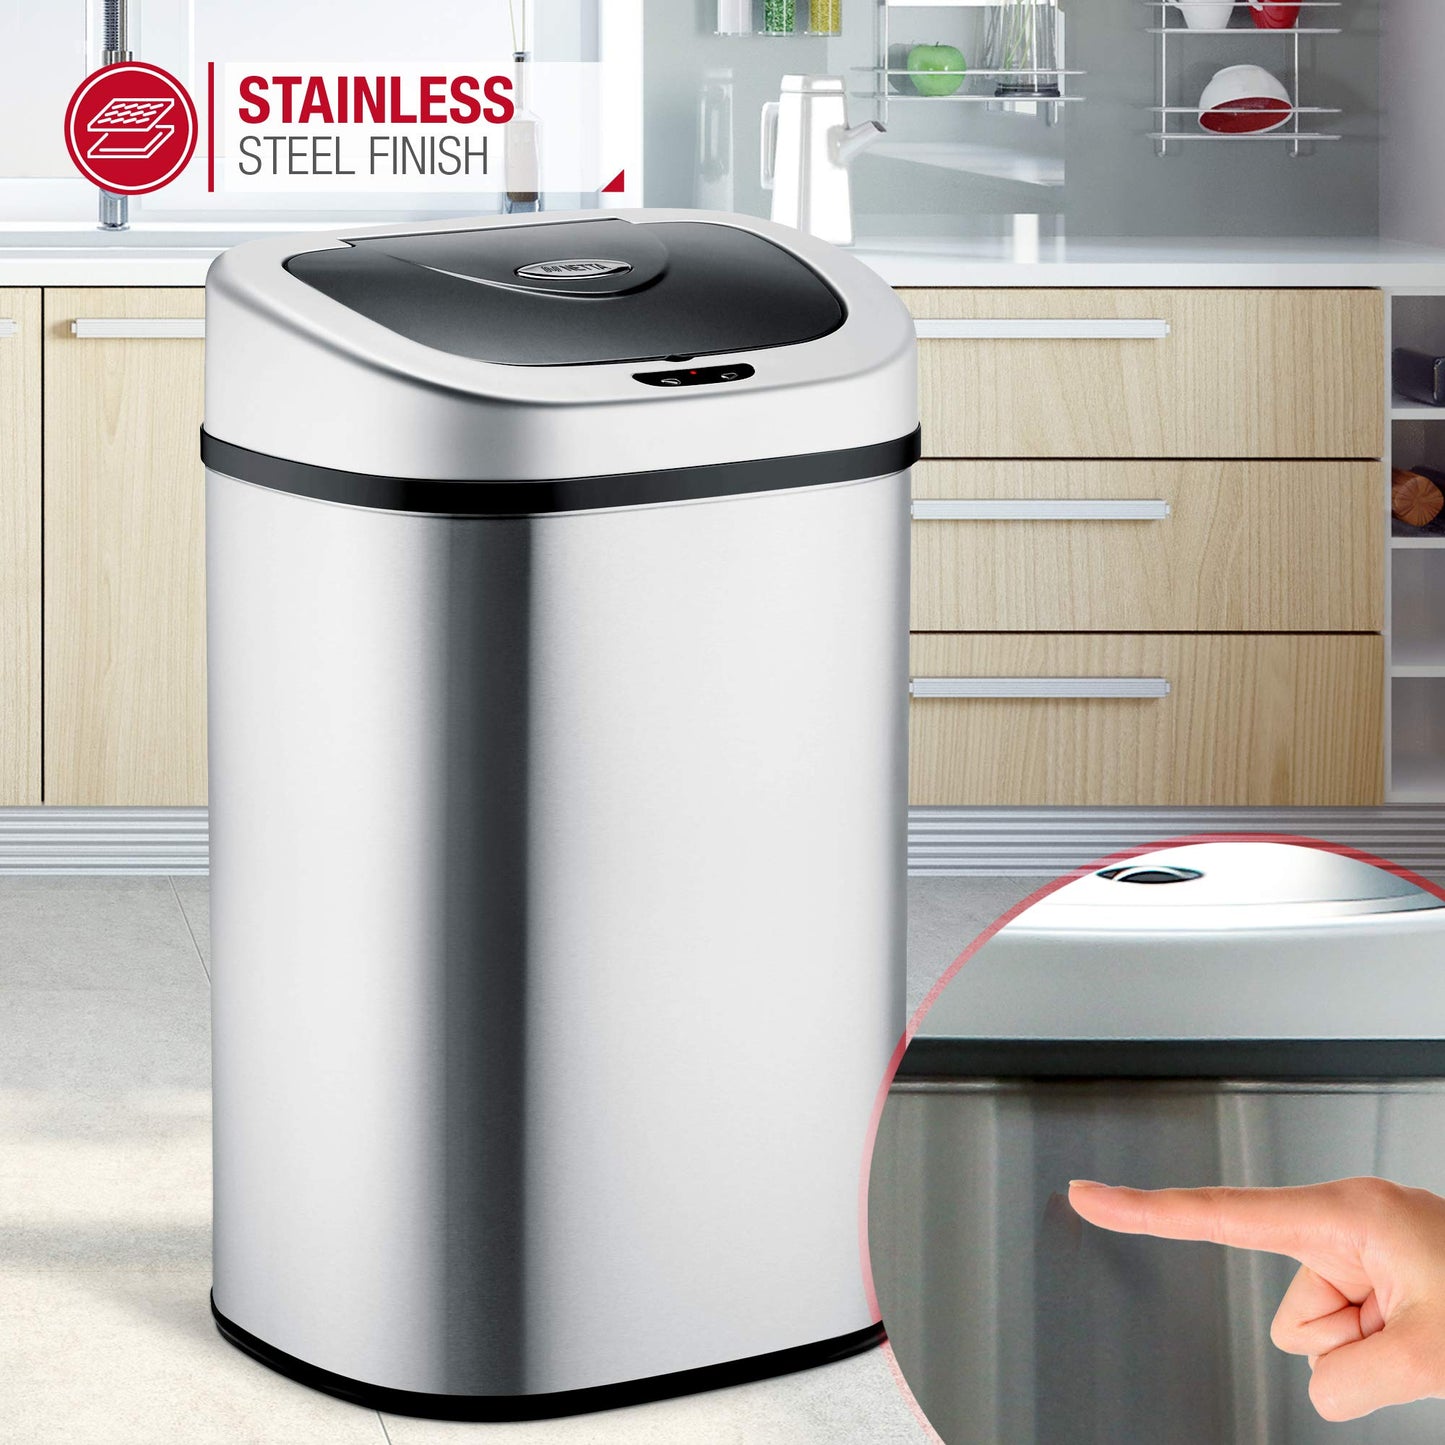 NETTA 80L Kitchen Recycling Sensor Bin – Large Touch-Free Automatic Motion Sensor Waste Rubbish Bin, Dustbin, Trash Can – Stainless Steel Finish – 80 Litre – Silver